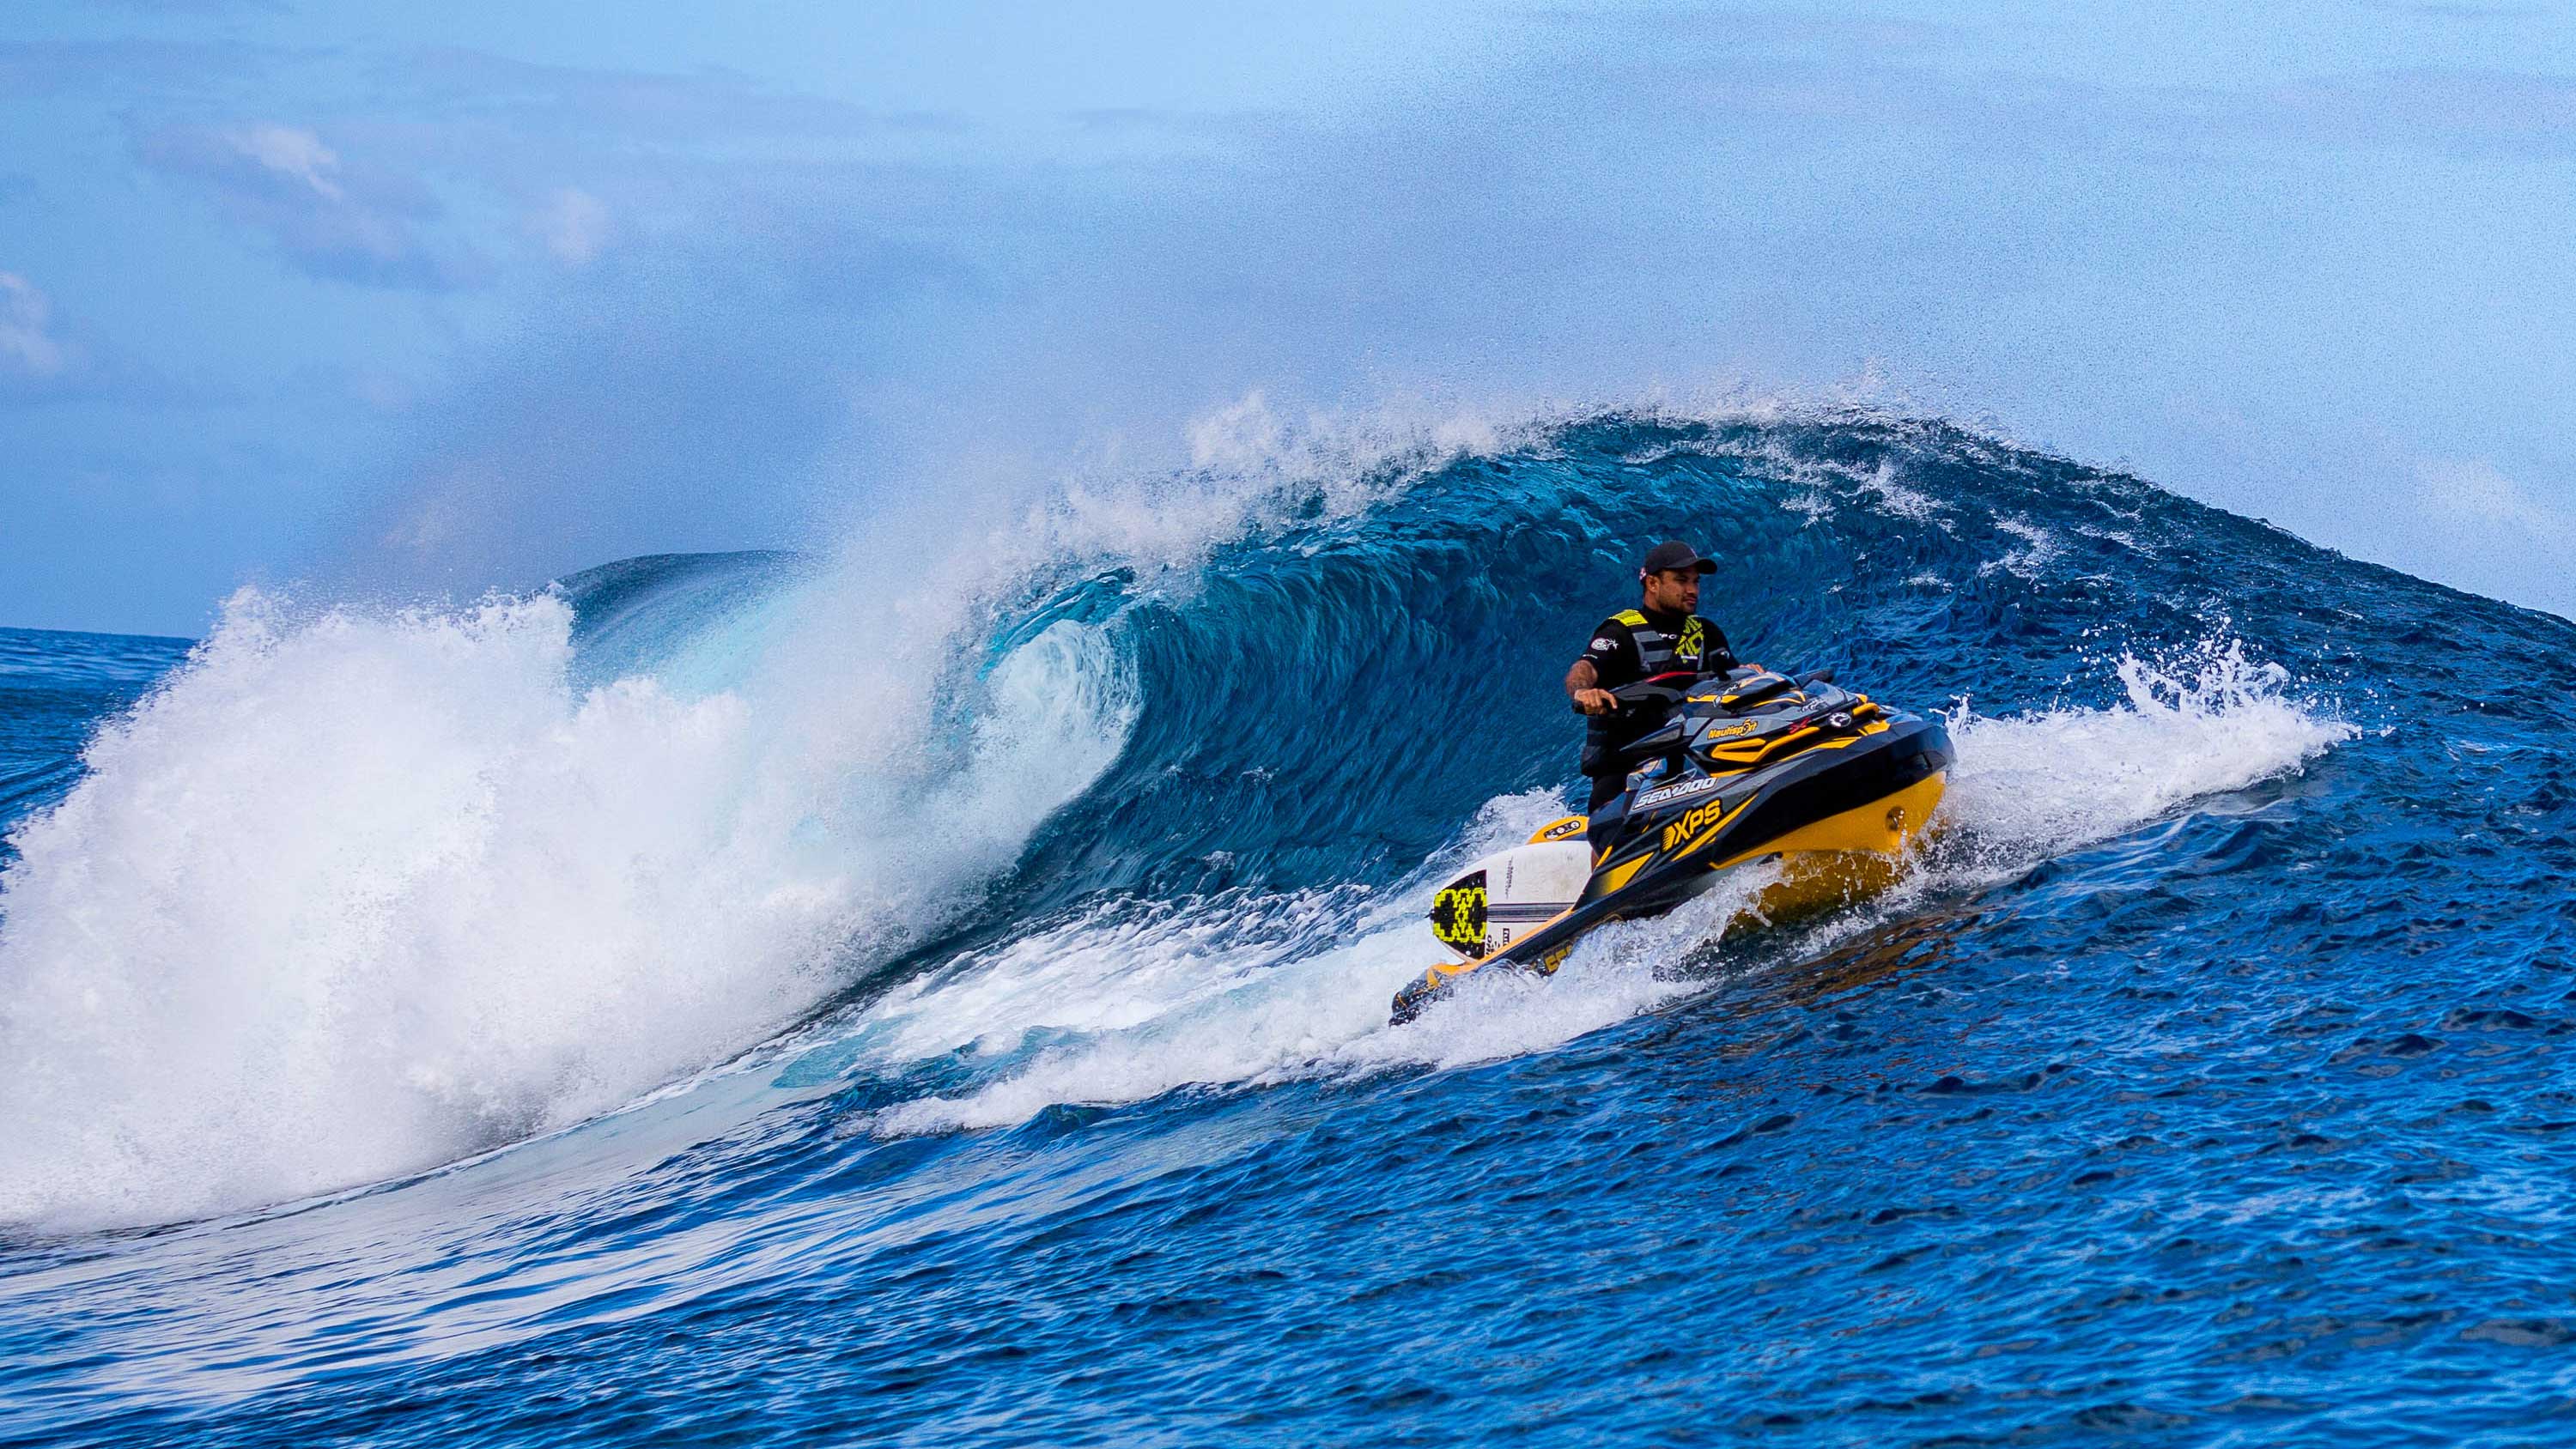 Michel Bourez on a Sea-Doo riding a wave